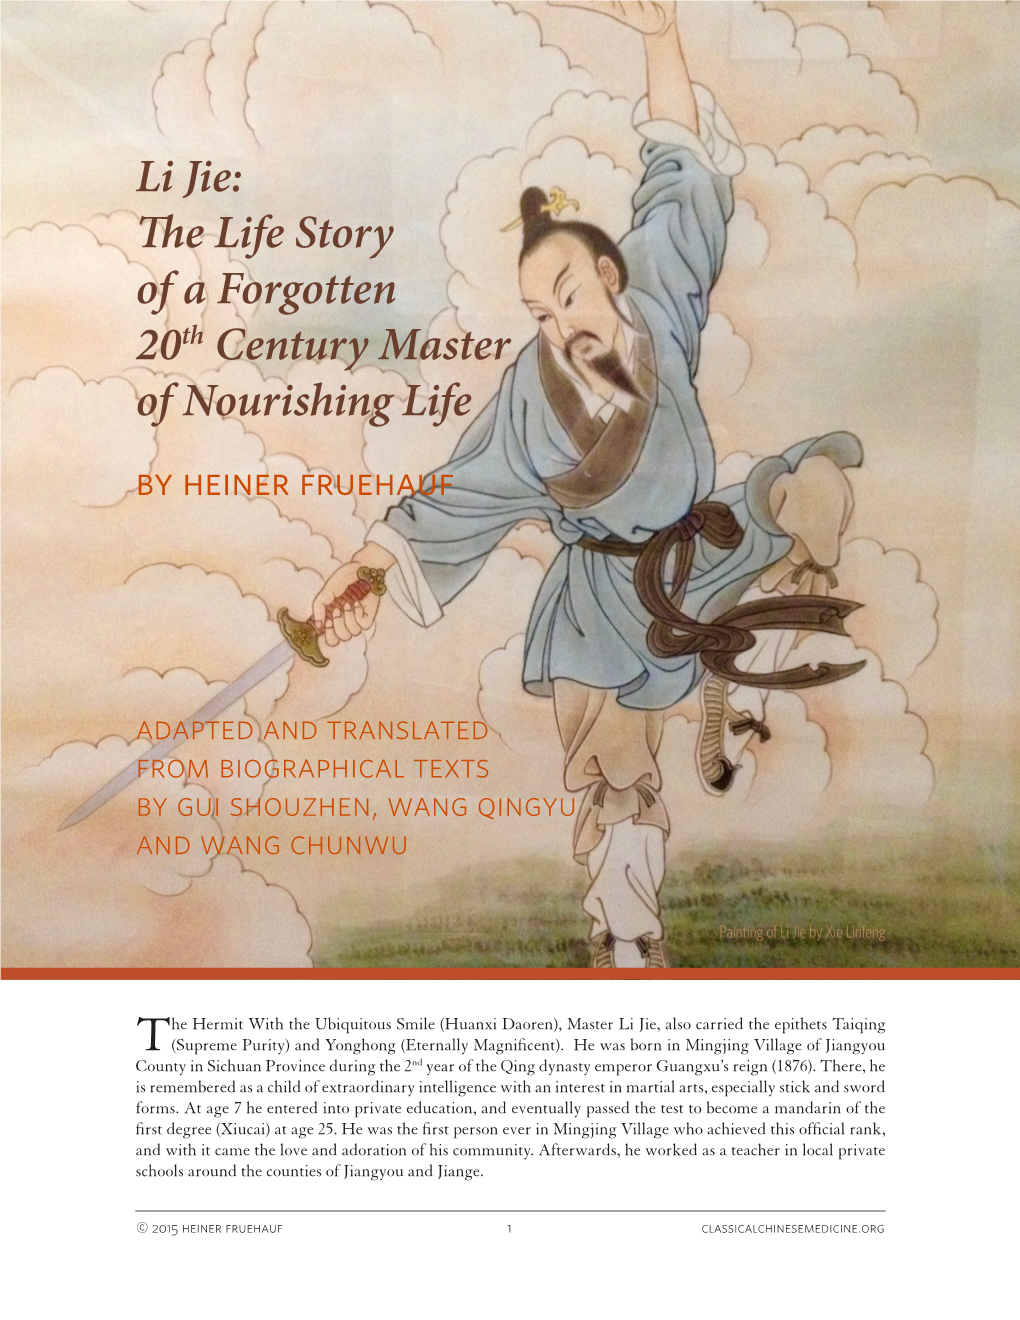 Li Jie: the Life Story of a Forgotten 20Th Century Master of Nourishing Life by Heiner Fruehauf